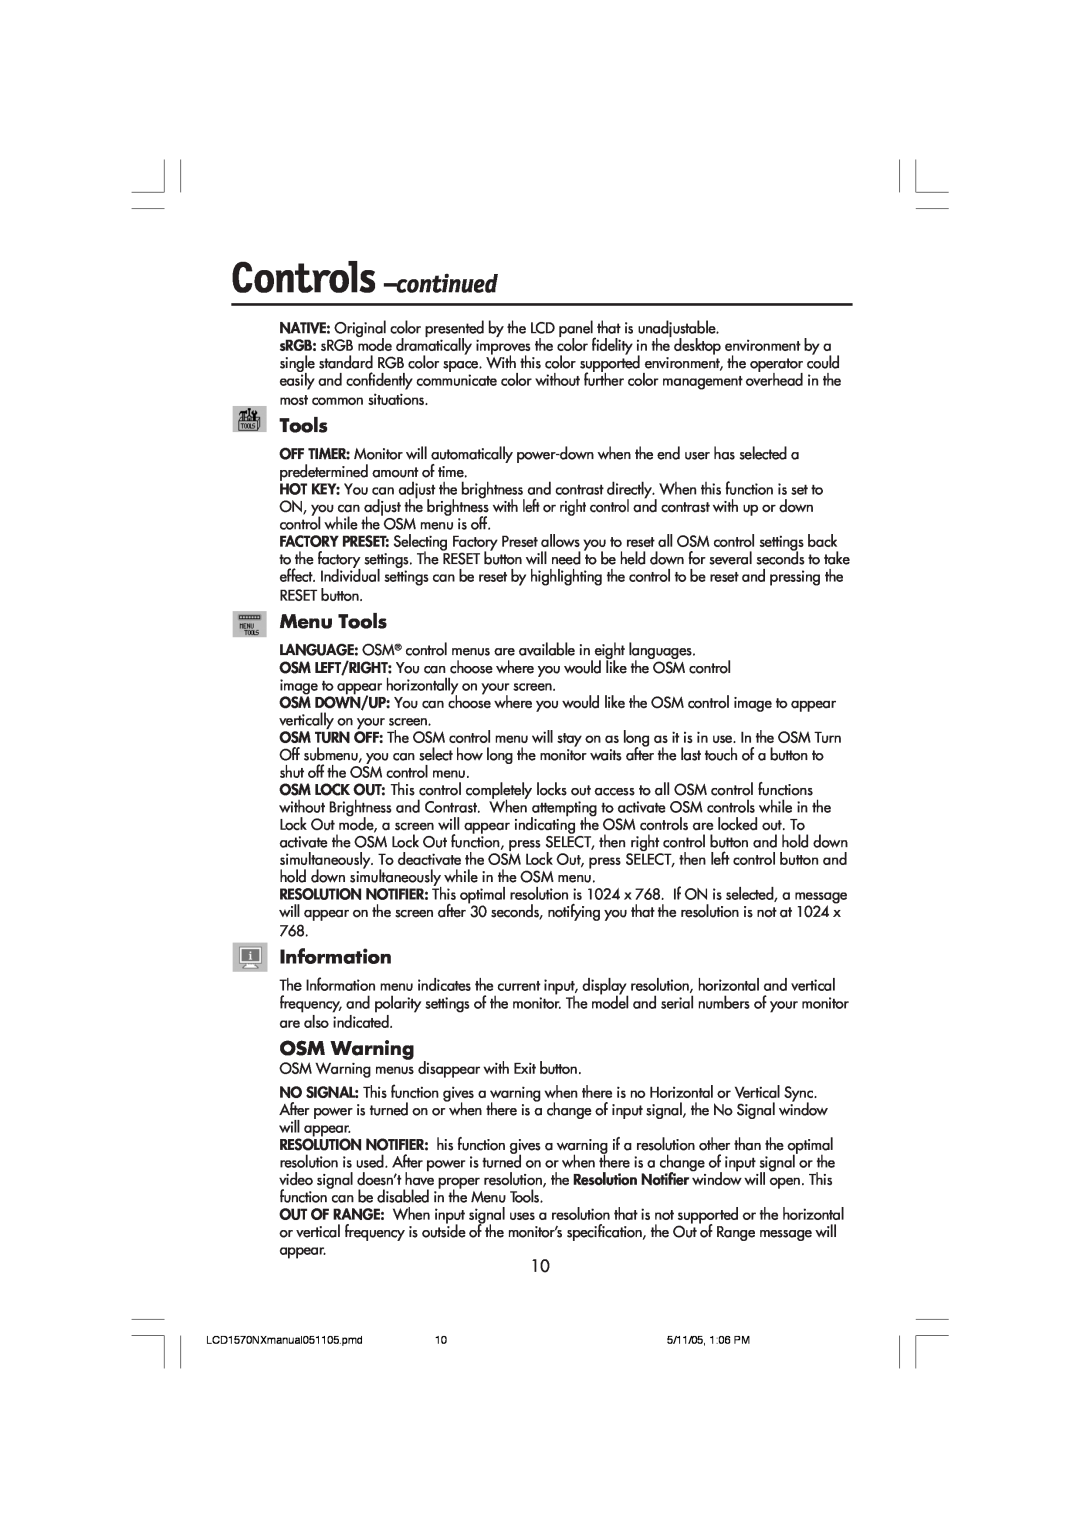 NEC LCD1570NX user manual Controls -continued, Menu Tools, Information, OSM Warning 